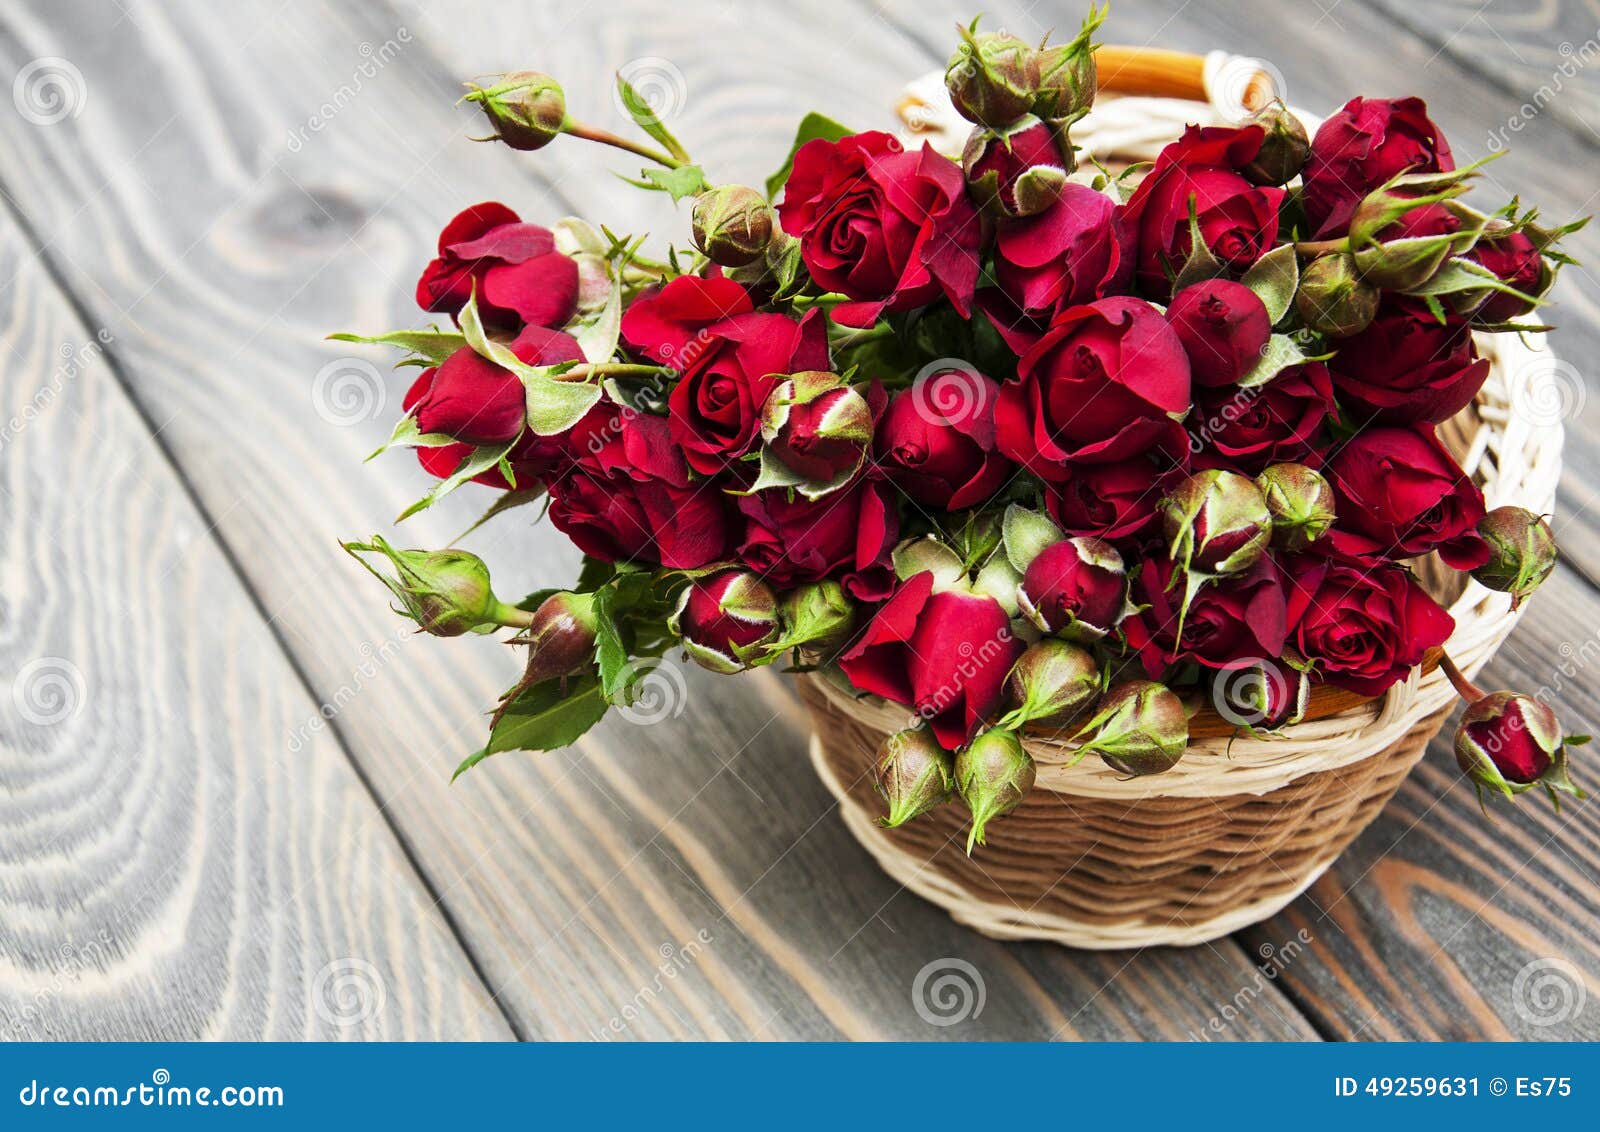 Розы В Корзине Фото